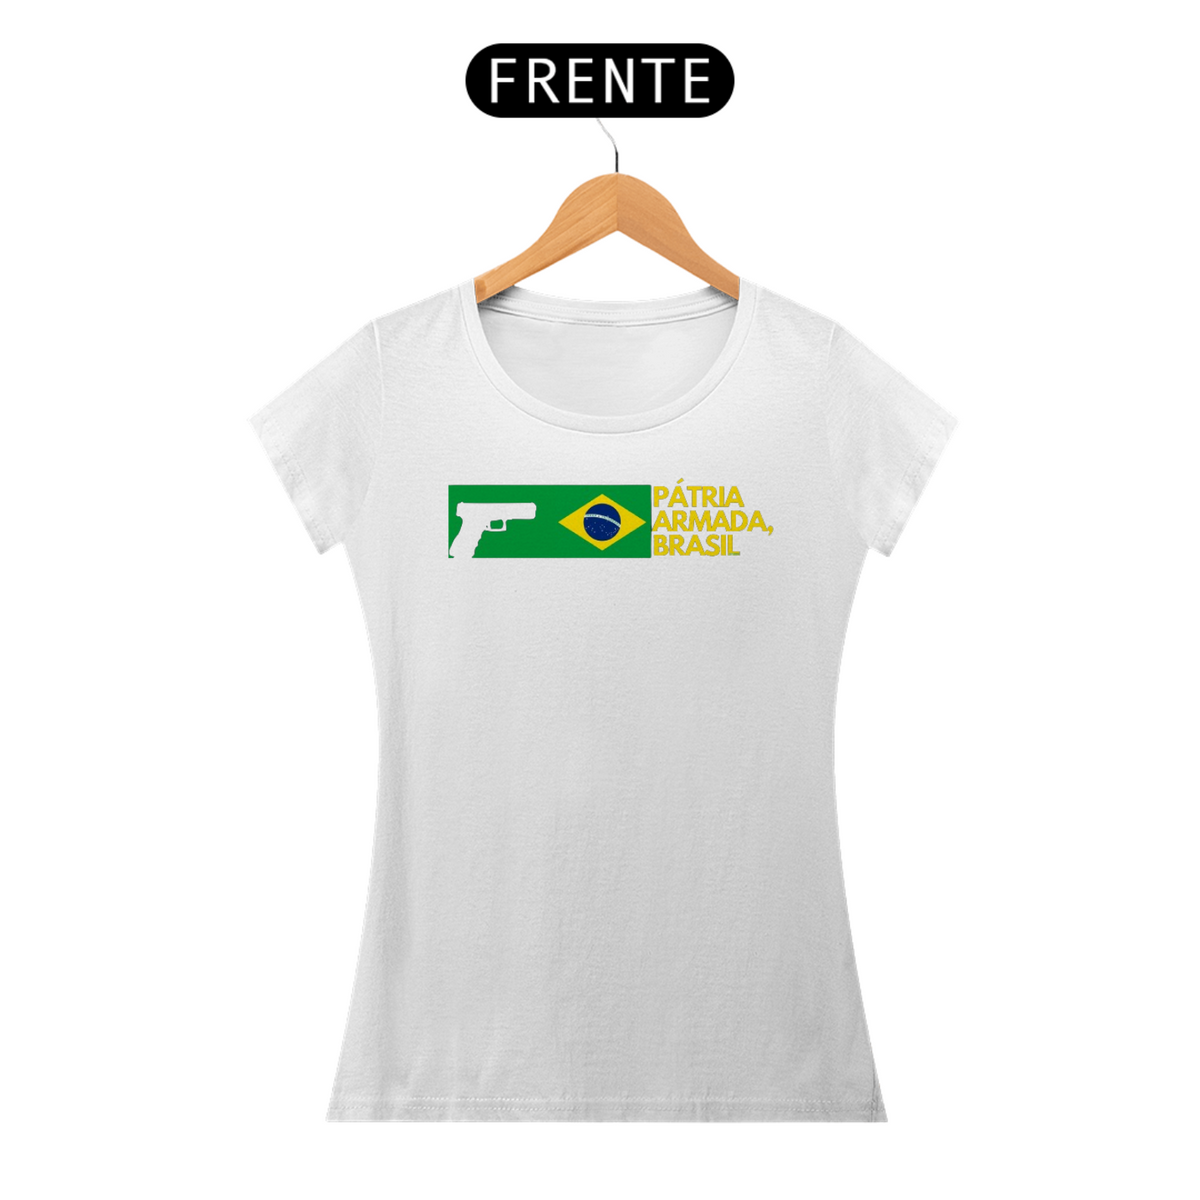 Nome do produto: Camiseta Pátria Armada Brasil Feminina